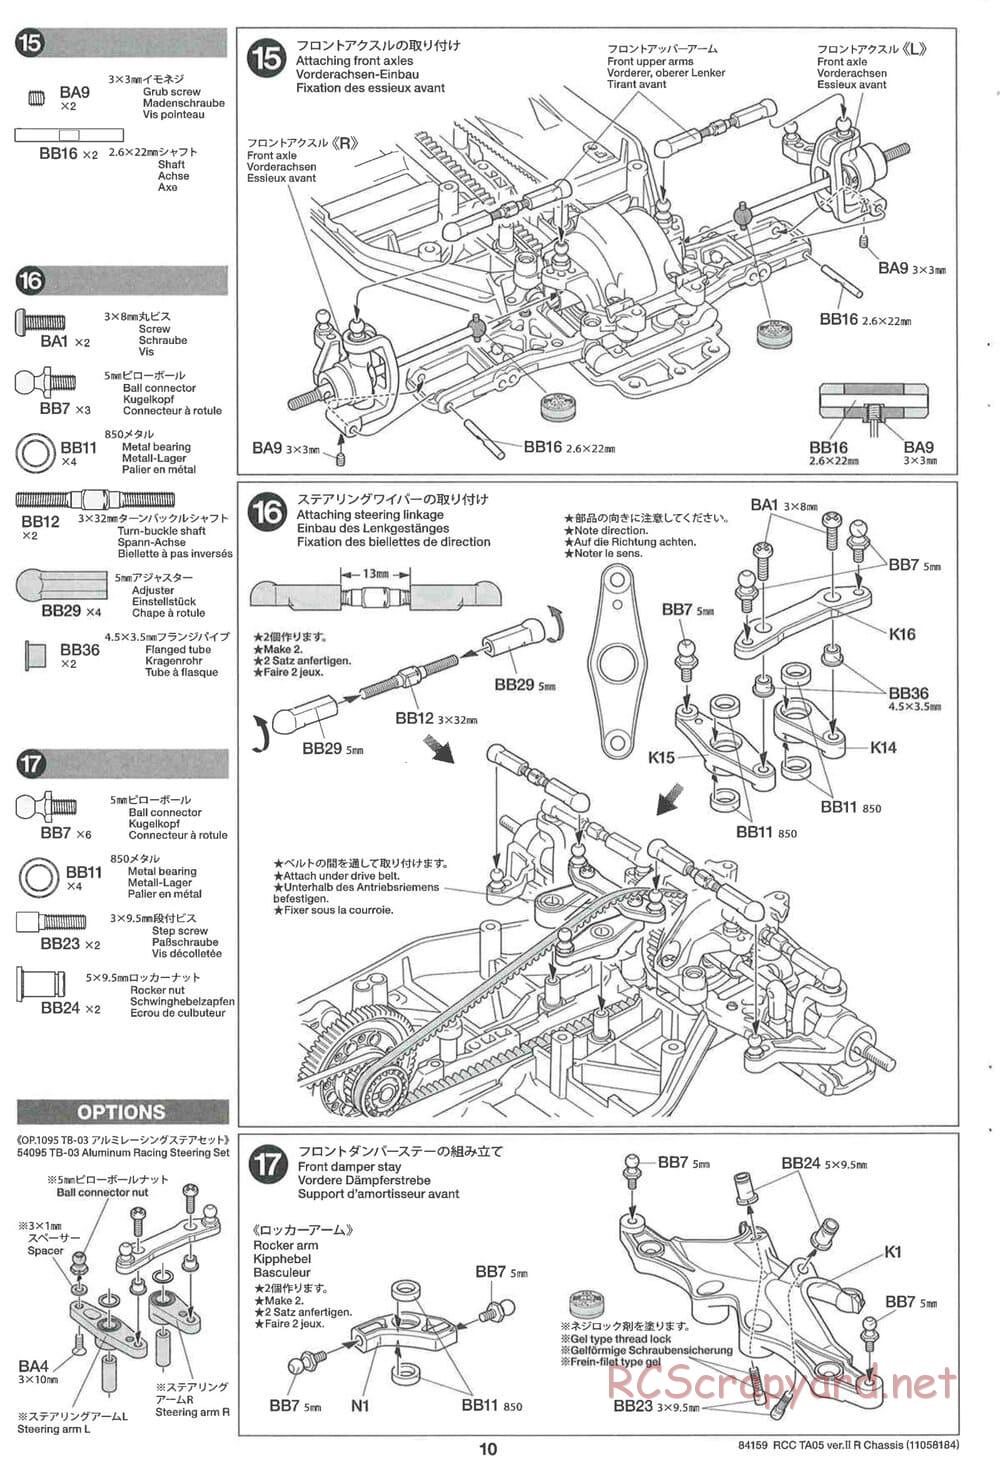 Tamiya - TA05 Ver.II R Chassis - Manual - Page 10